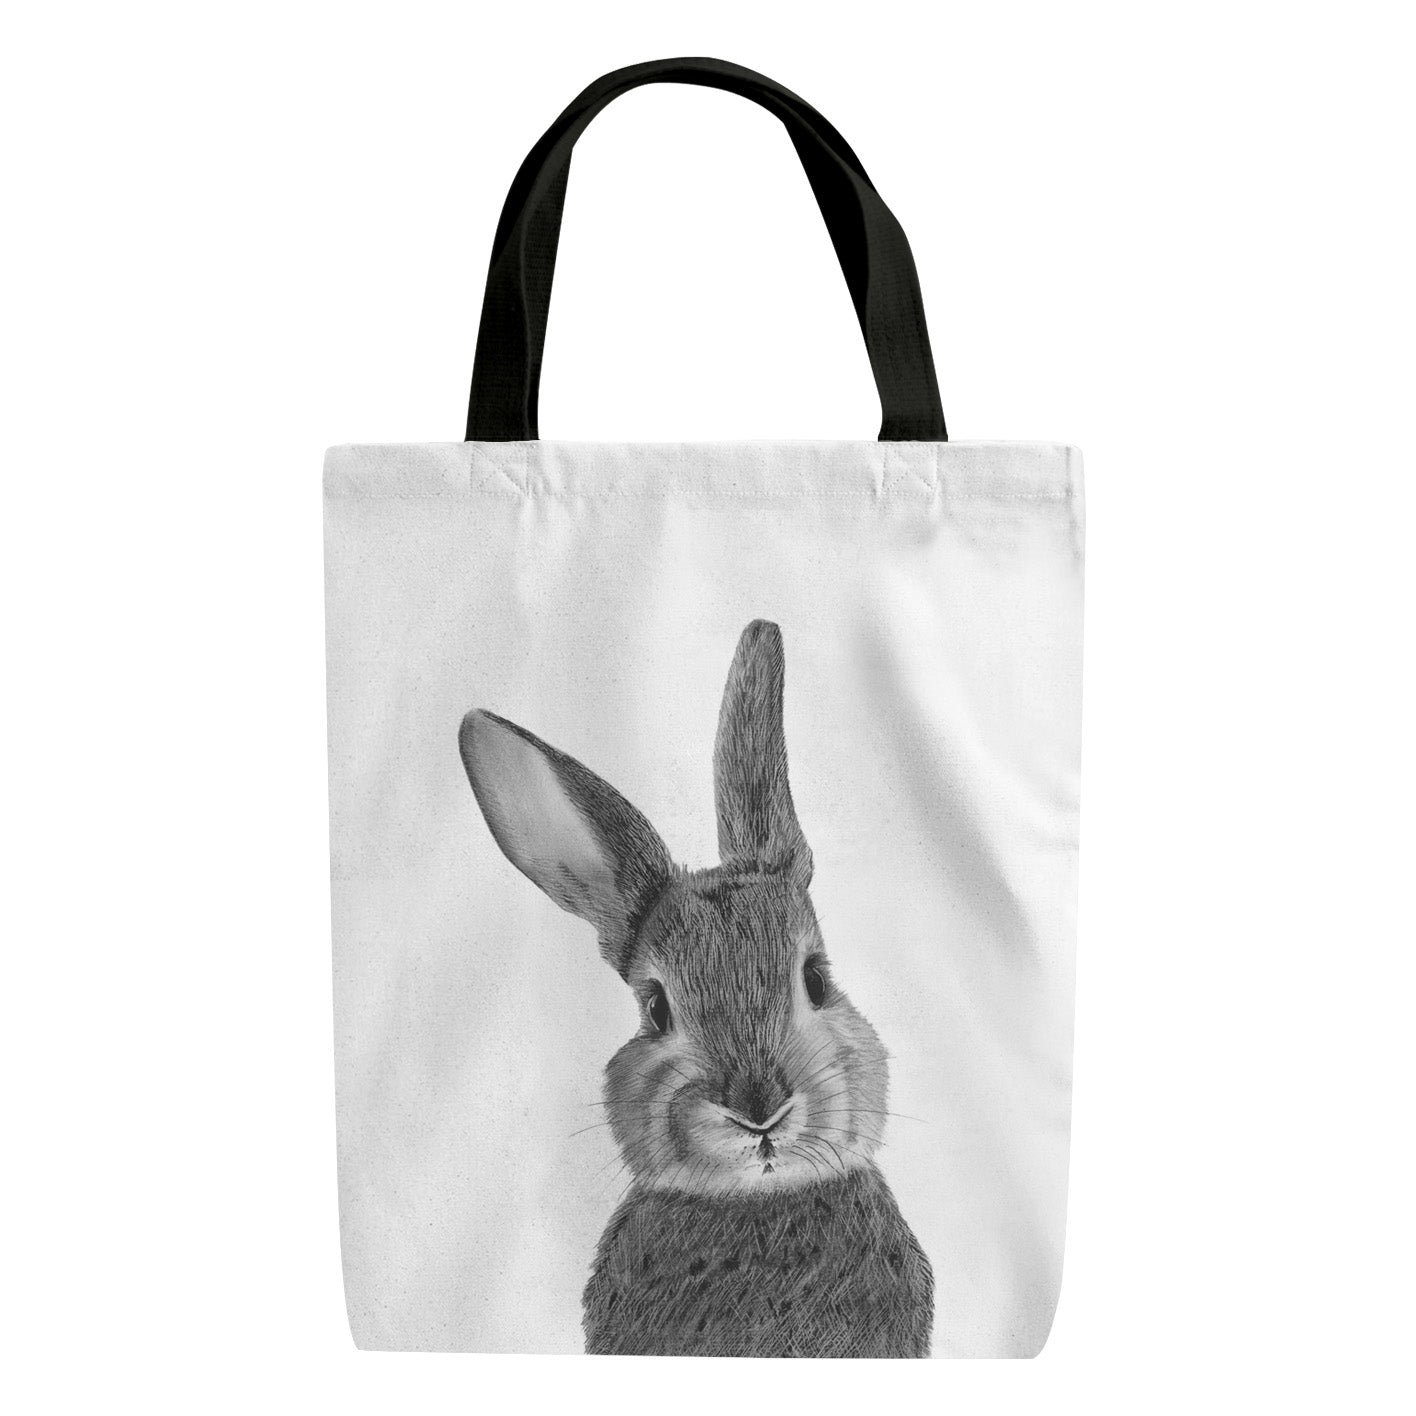 Bunny Shopper Bag From Libra Fine Arts